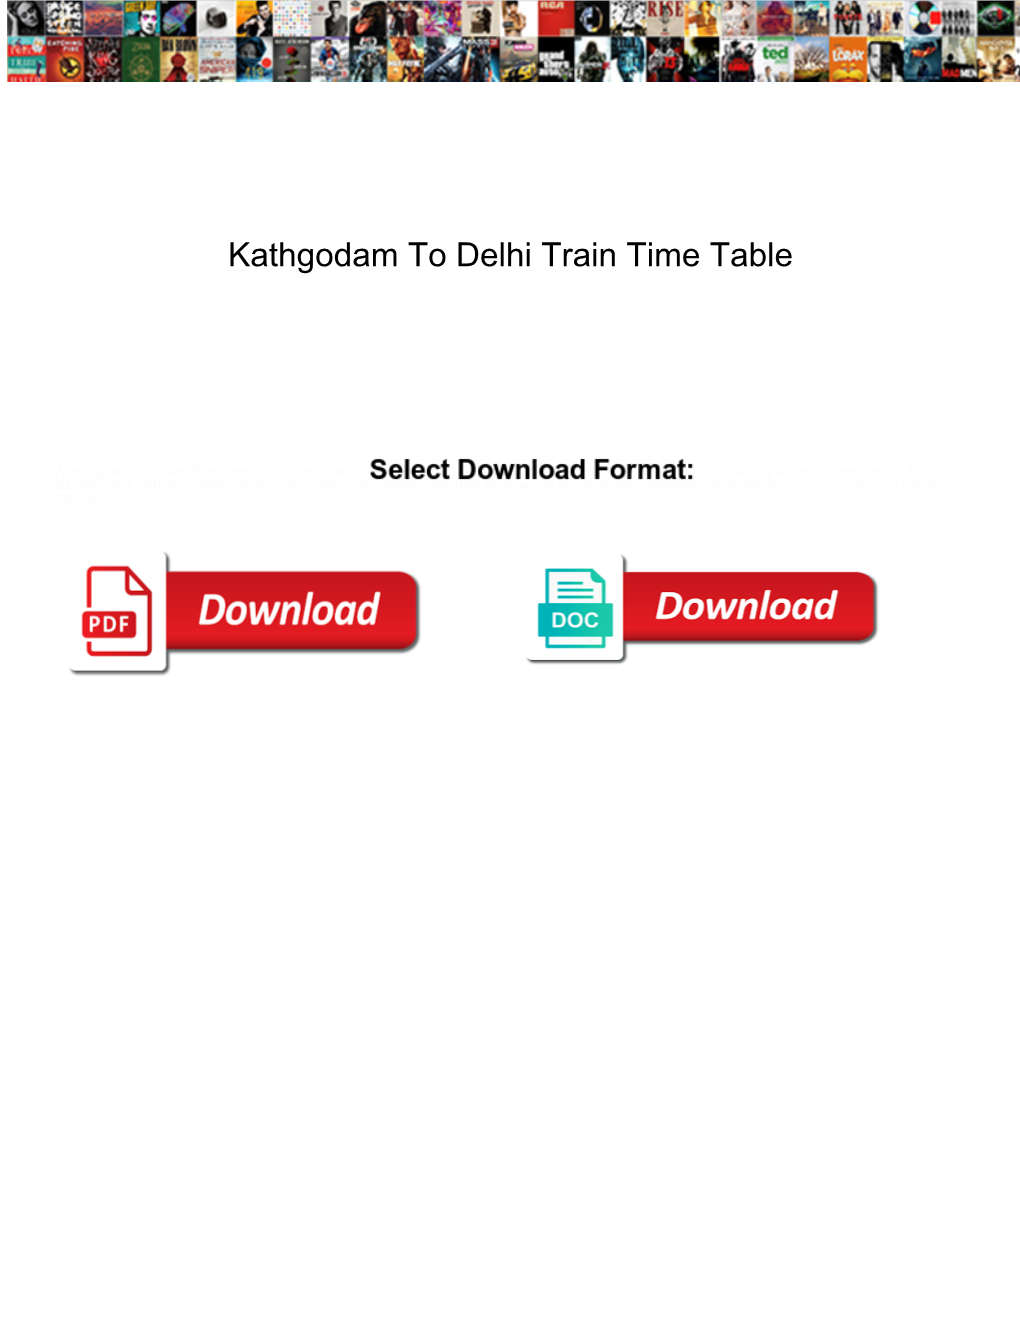 Kathgodam to Delhi Train Time Table